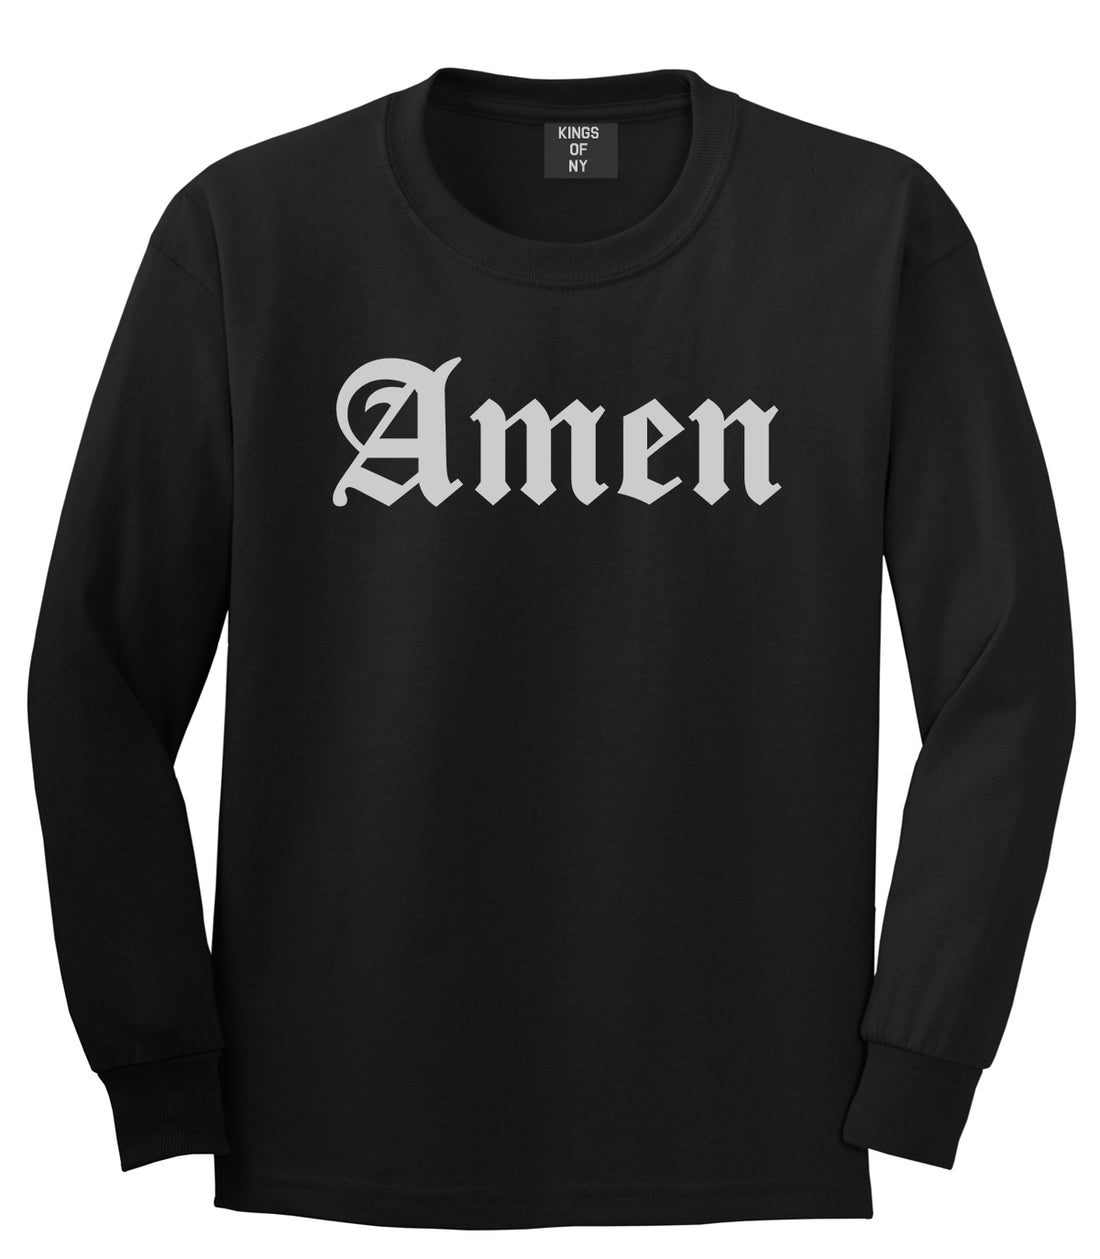 Amen Old English Prayer Mens Long Sleeve T-Shirt Black